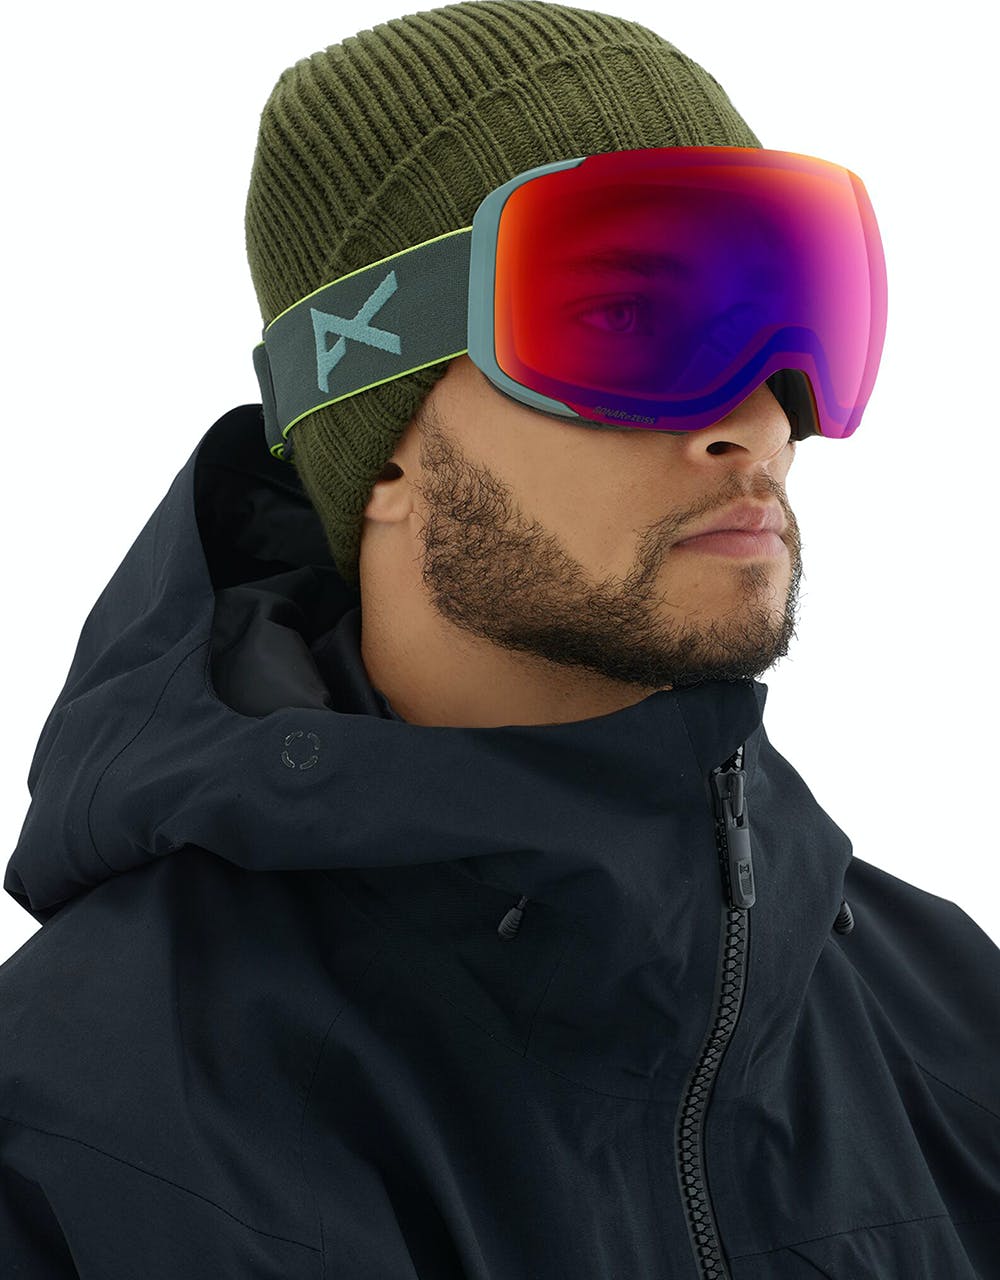 Anon M2 MFI® Snowboard Goggles - Grey Pop/Sonar Infared Blue